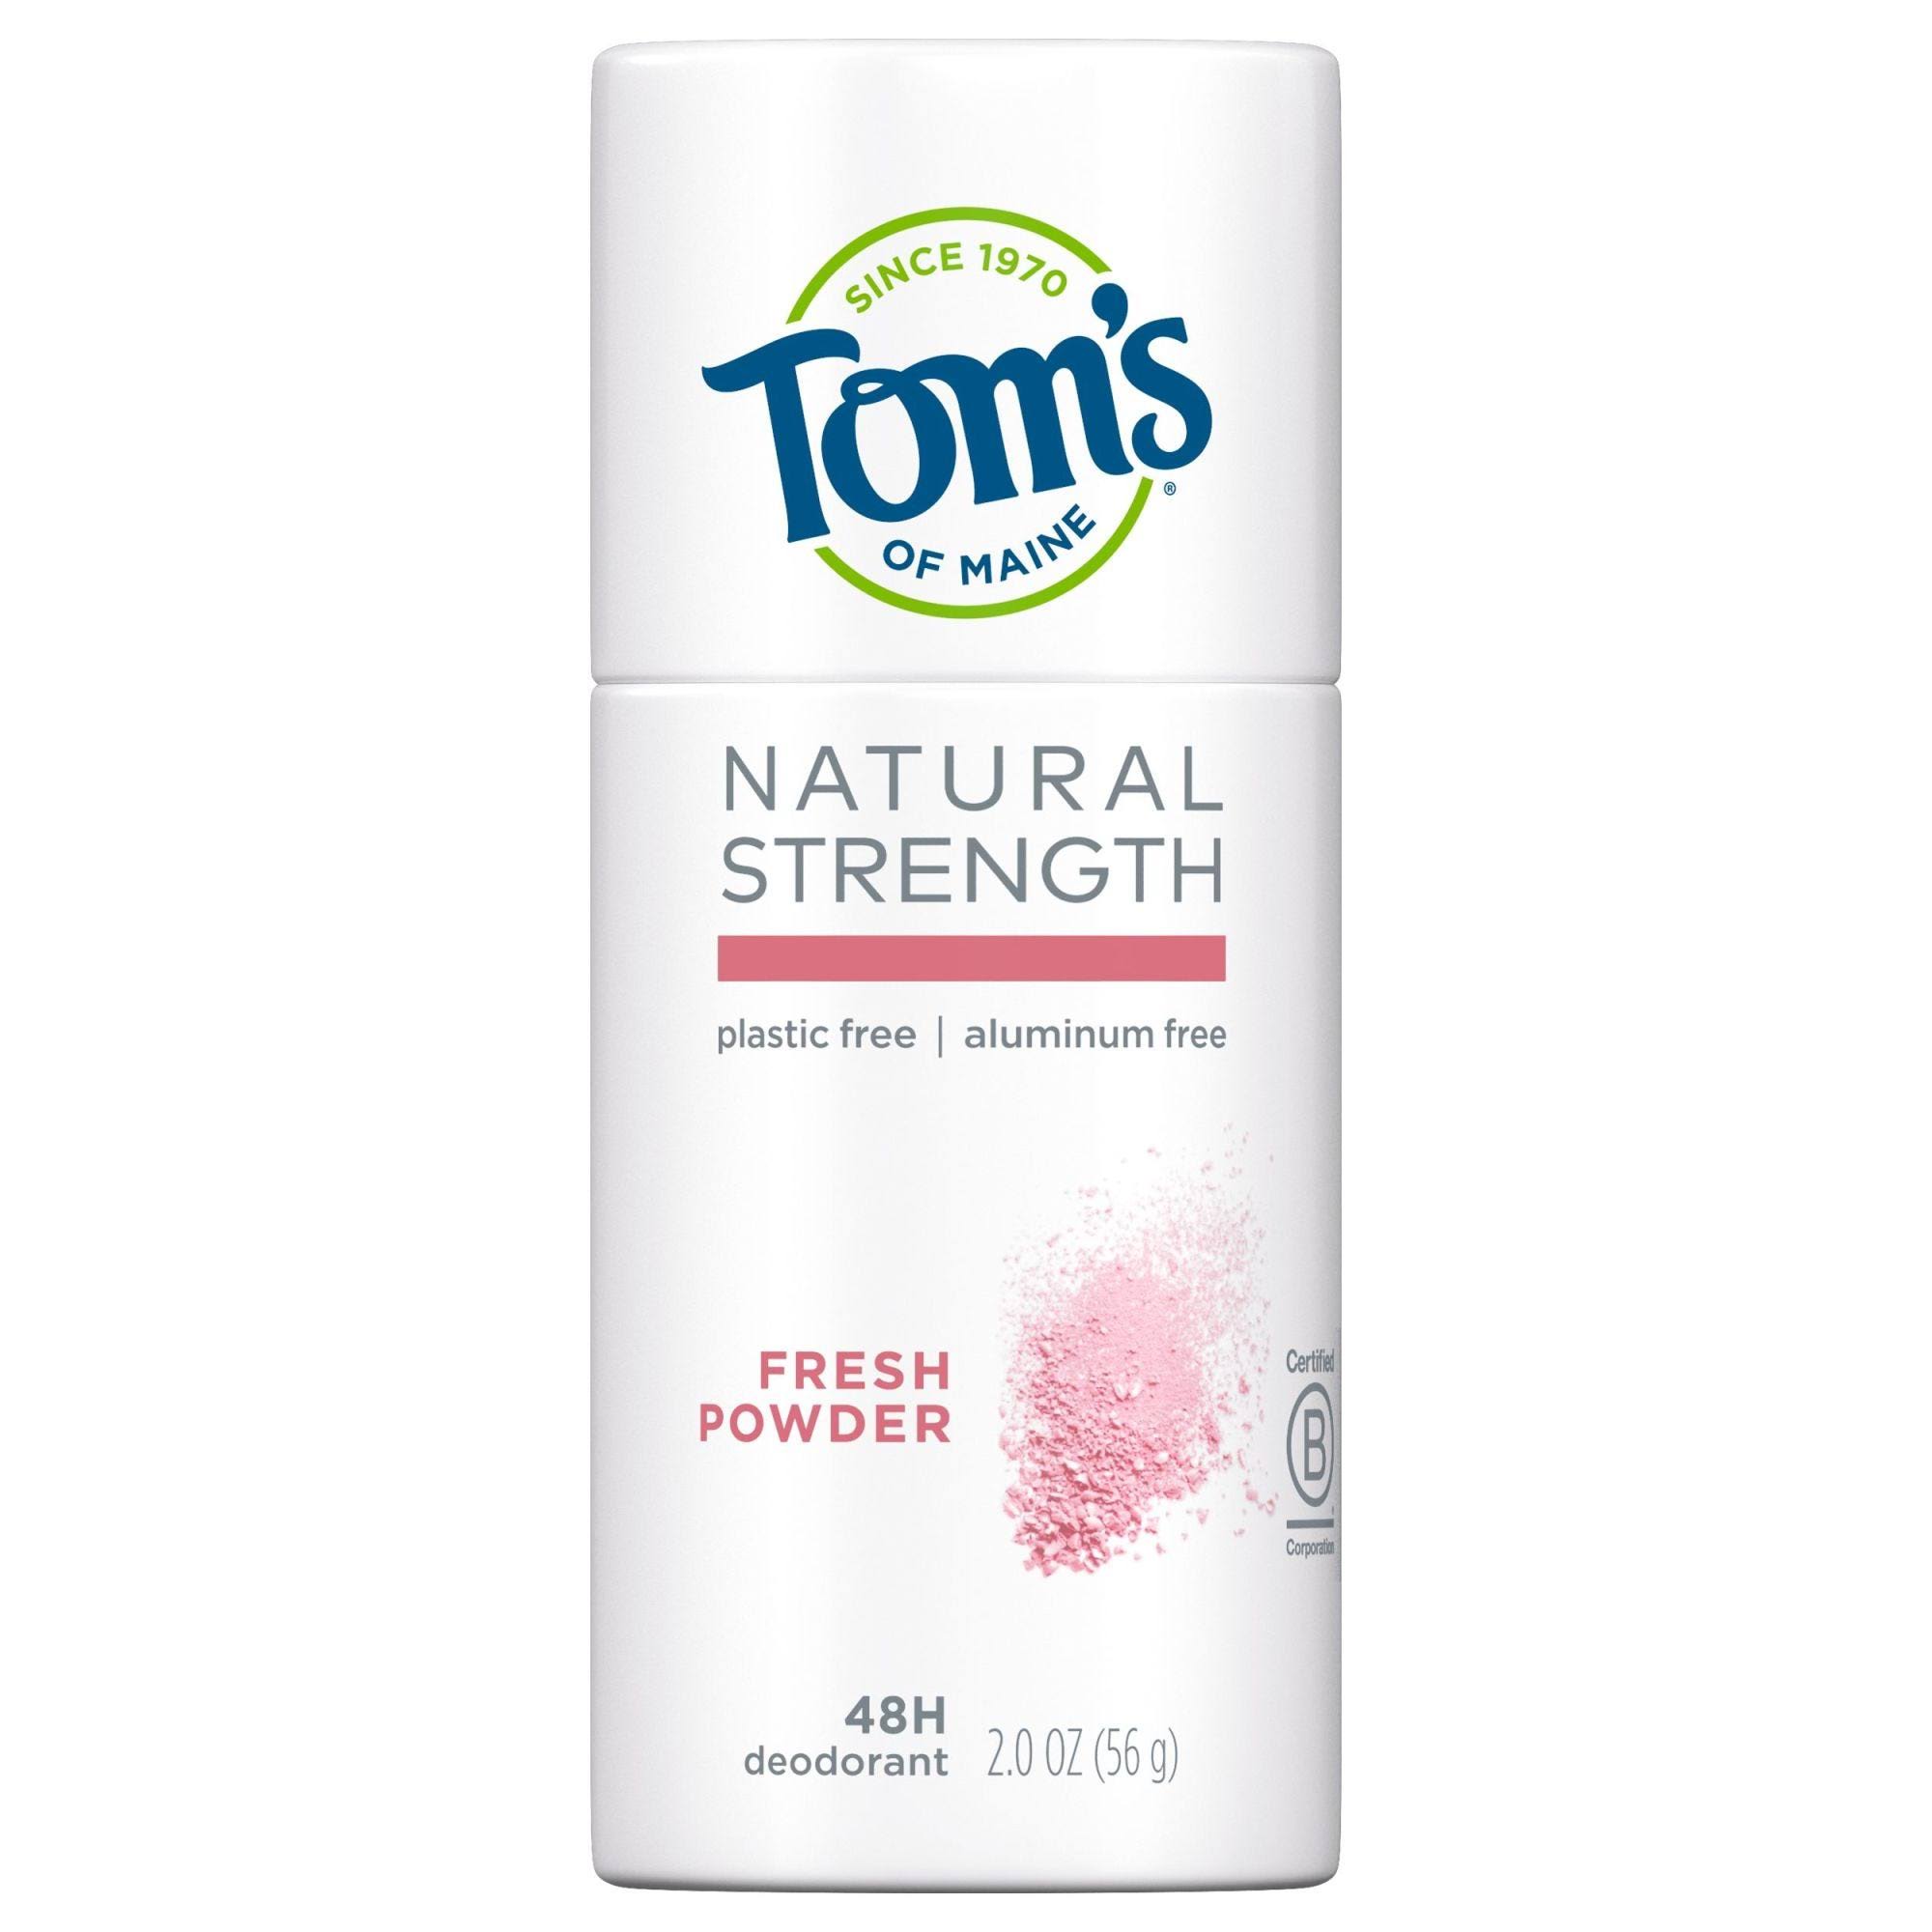 Tom's of maine natural strength plastic-free aluminum-free deodorant, fresh powder, 2 oz